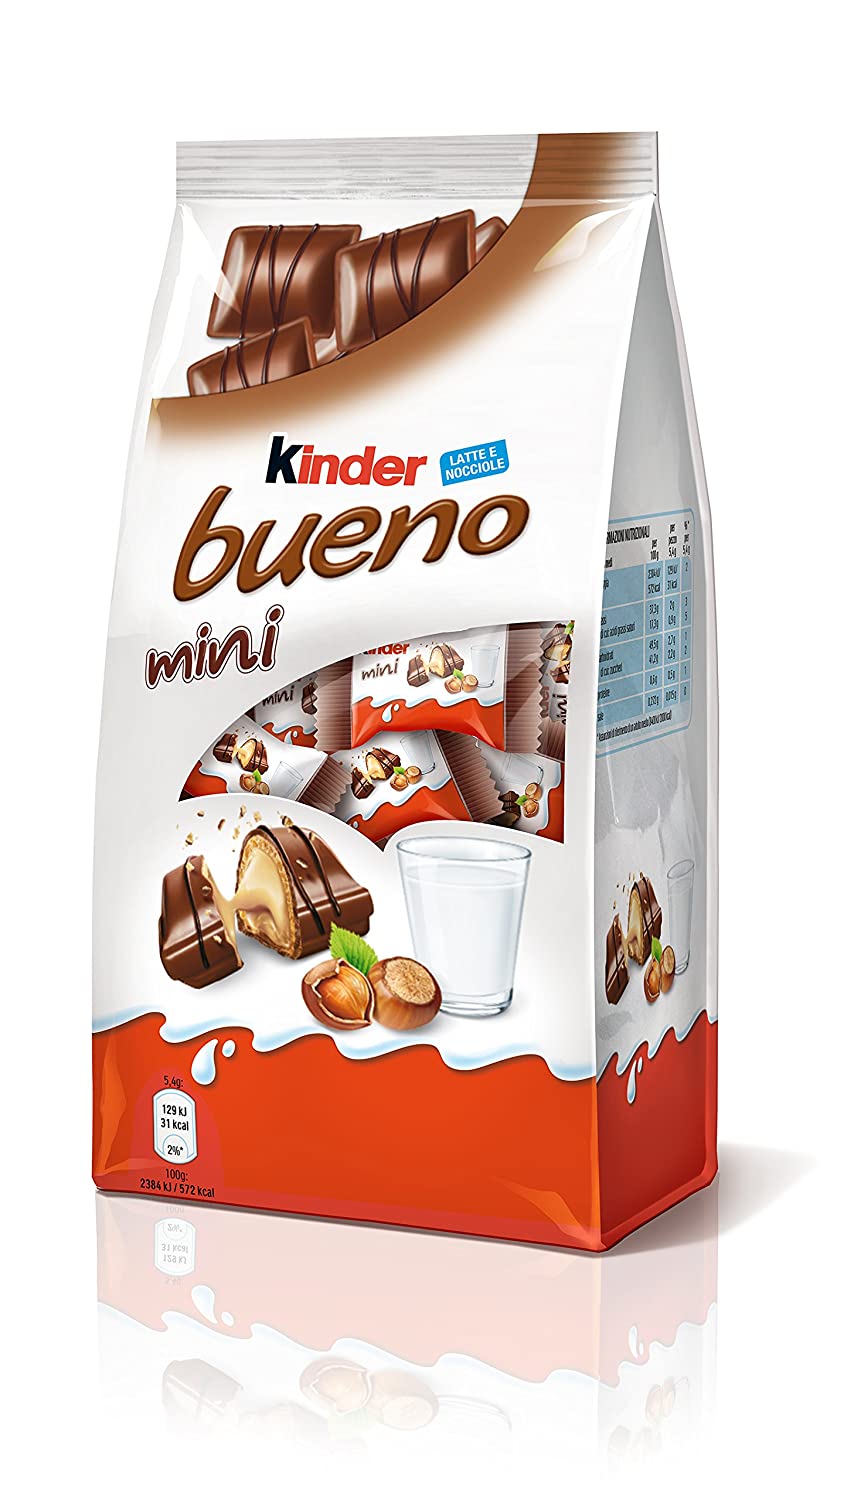 Italian Ferrero Kinder Bueno Chocolate, 12 Bars Per Box